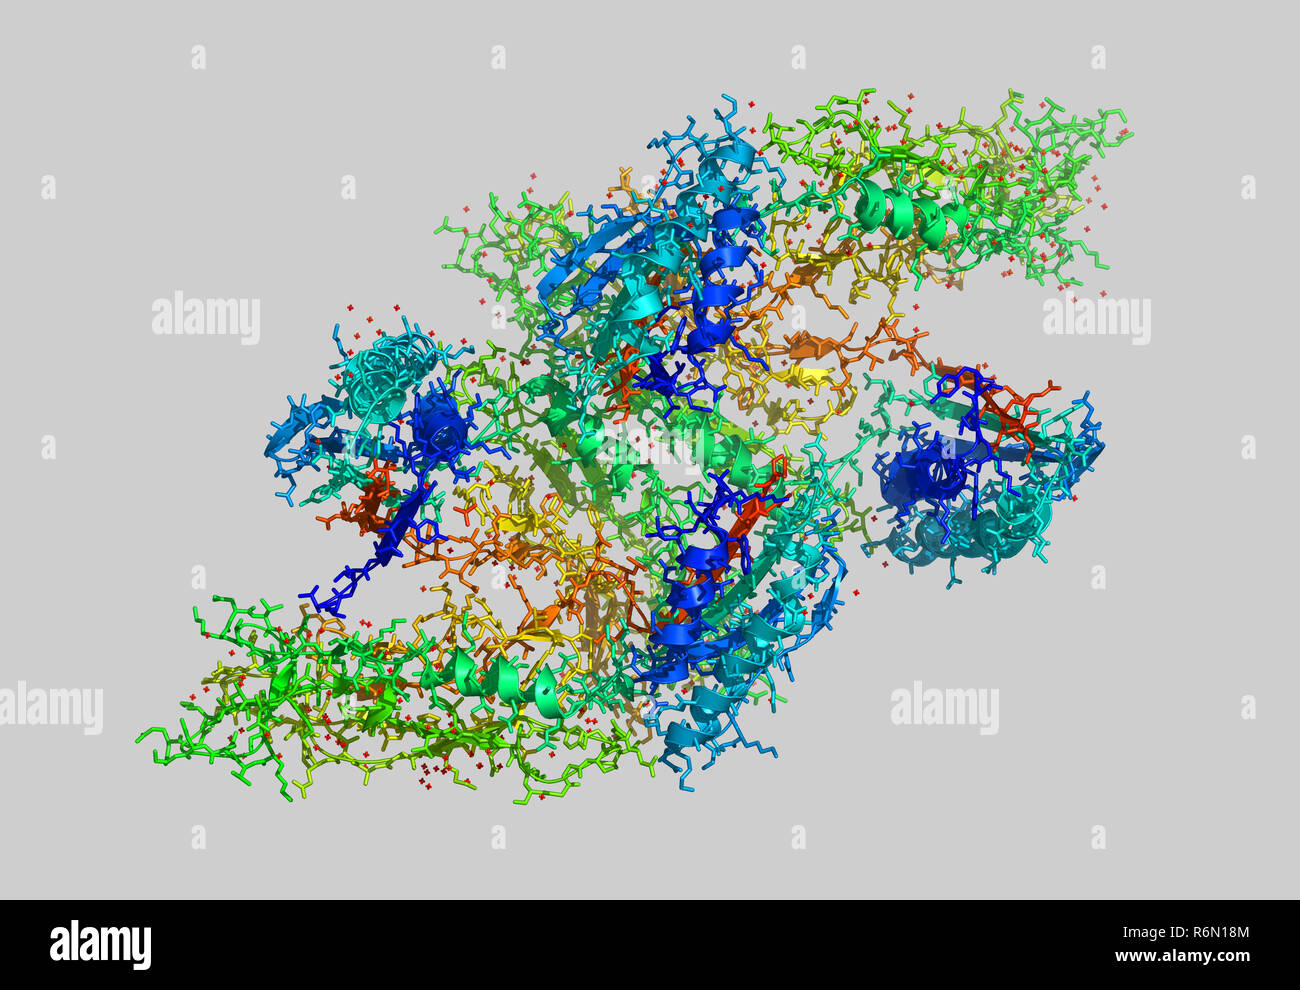 protein molecule model Stock Photo